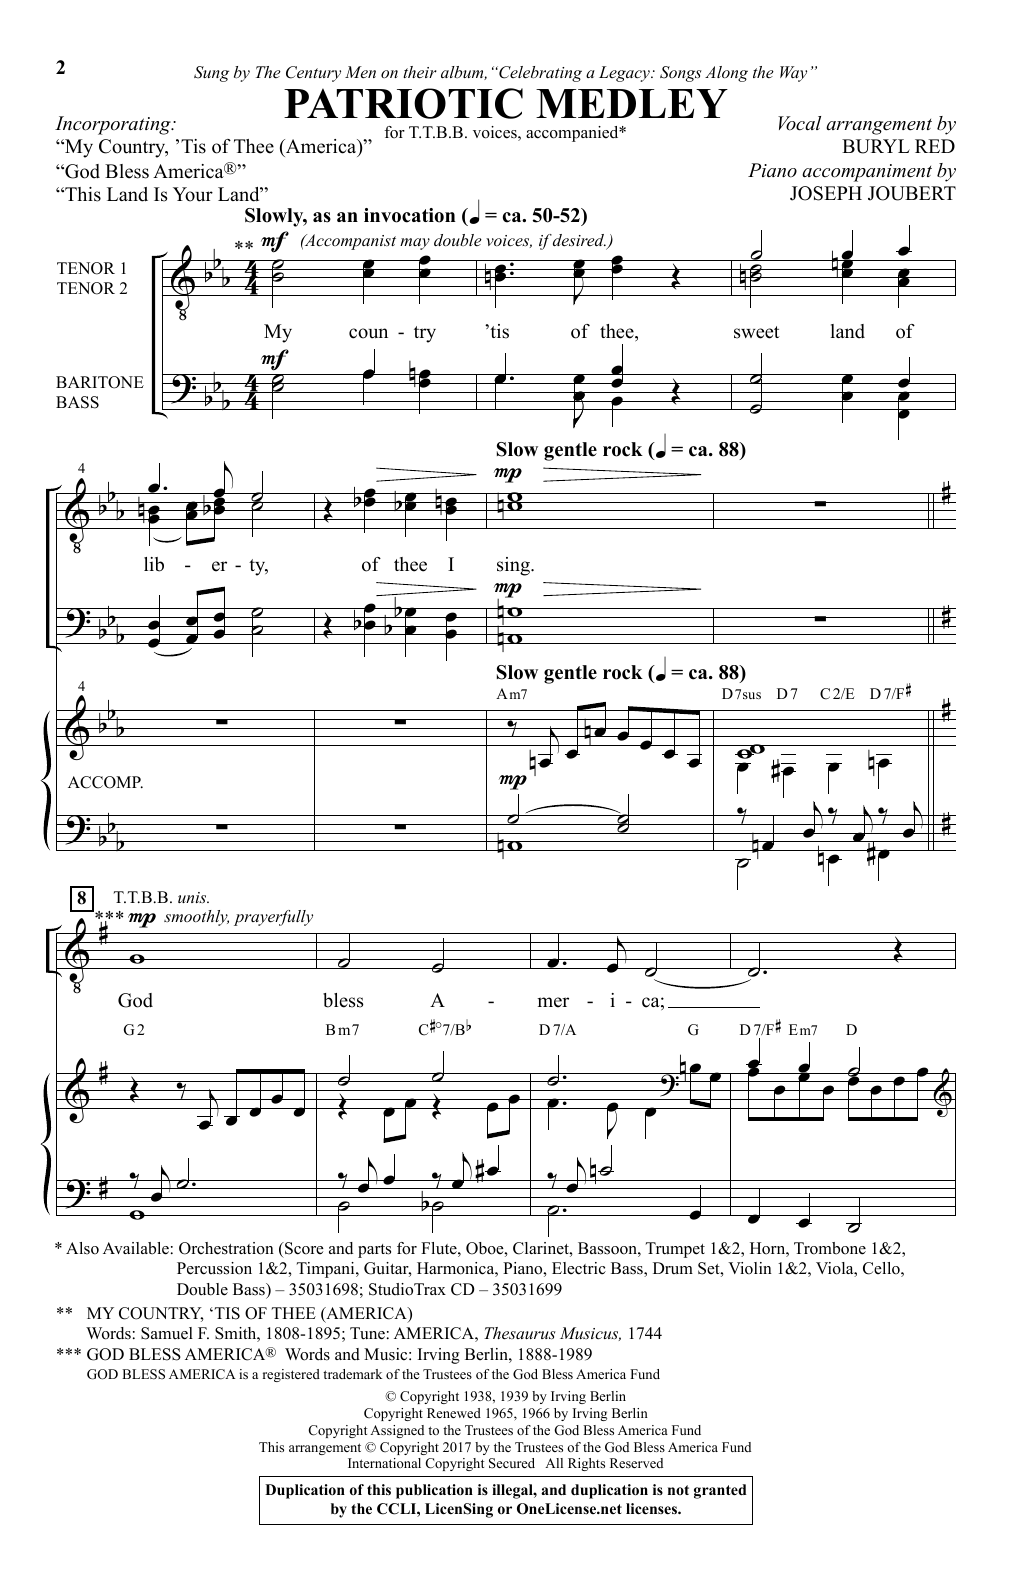 Buryl Red Patriotic Medley sheet music notes and chords arranged for TTBB Choir